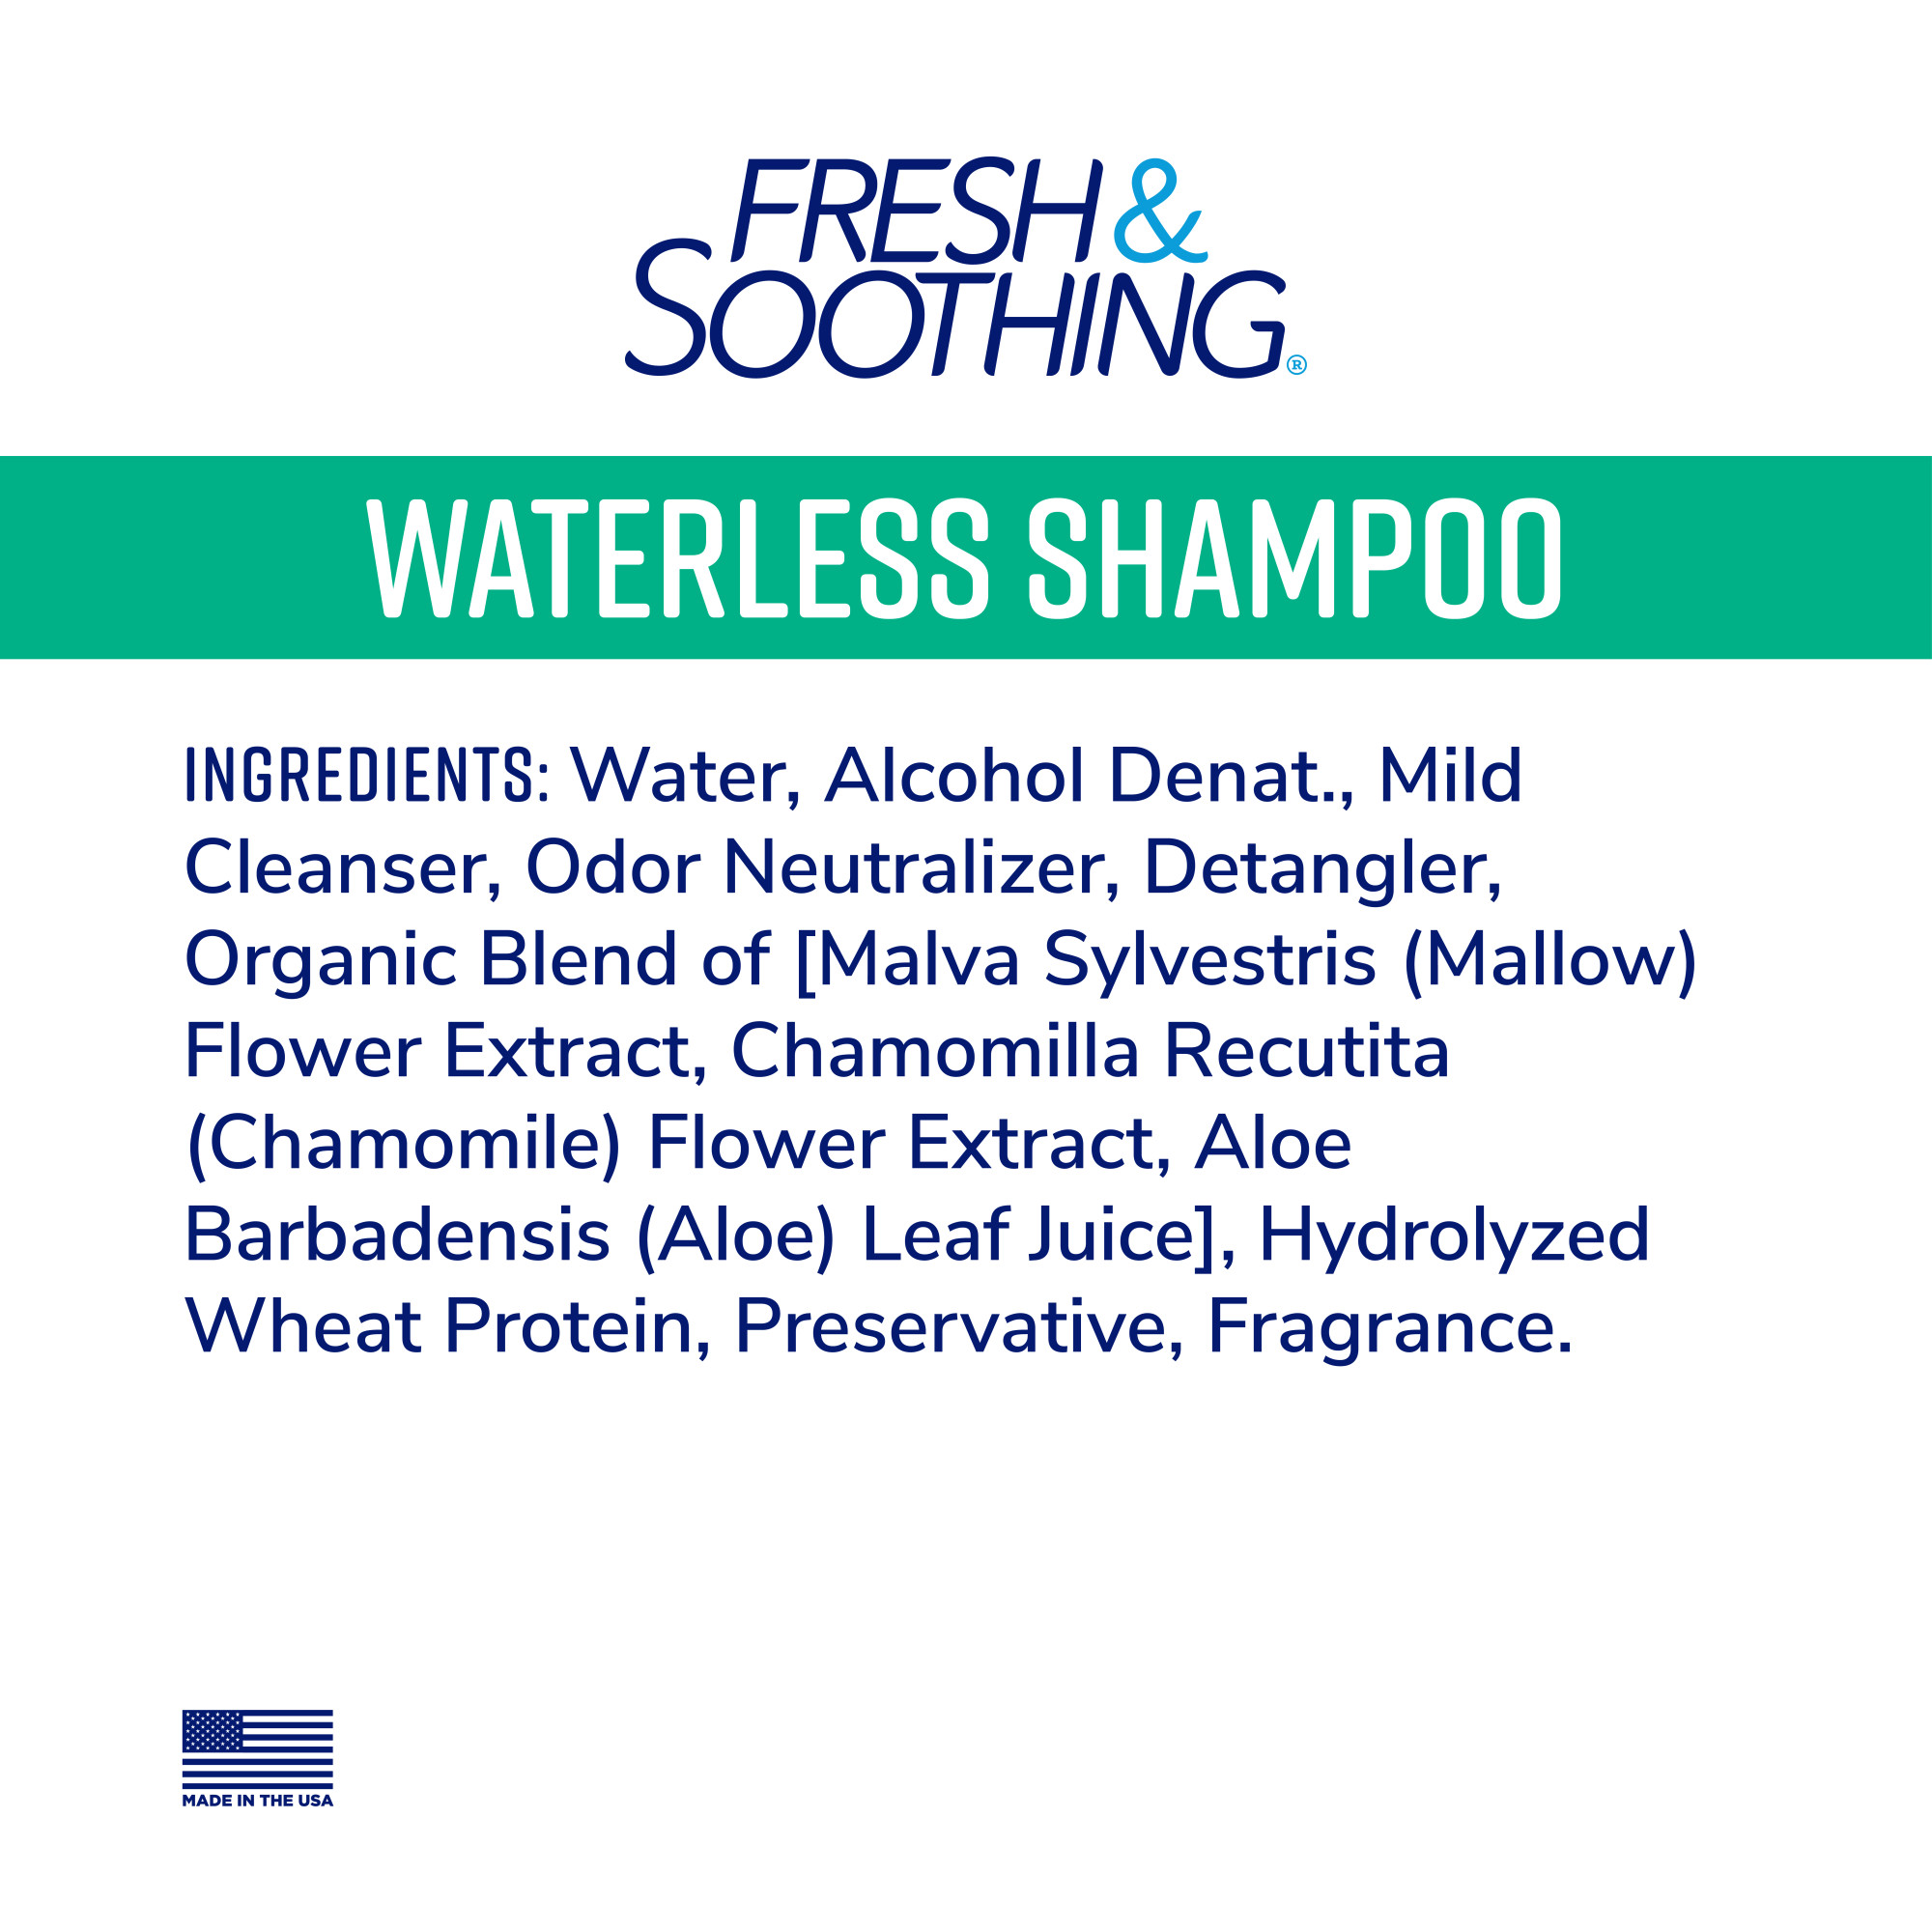 Natural Waterless Foaming Shampoo for Pets